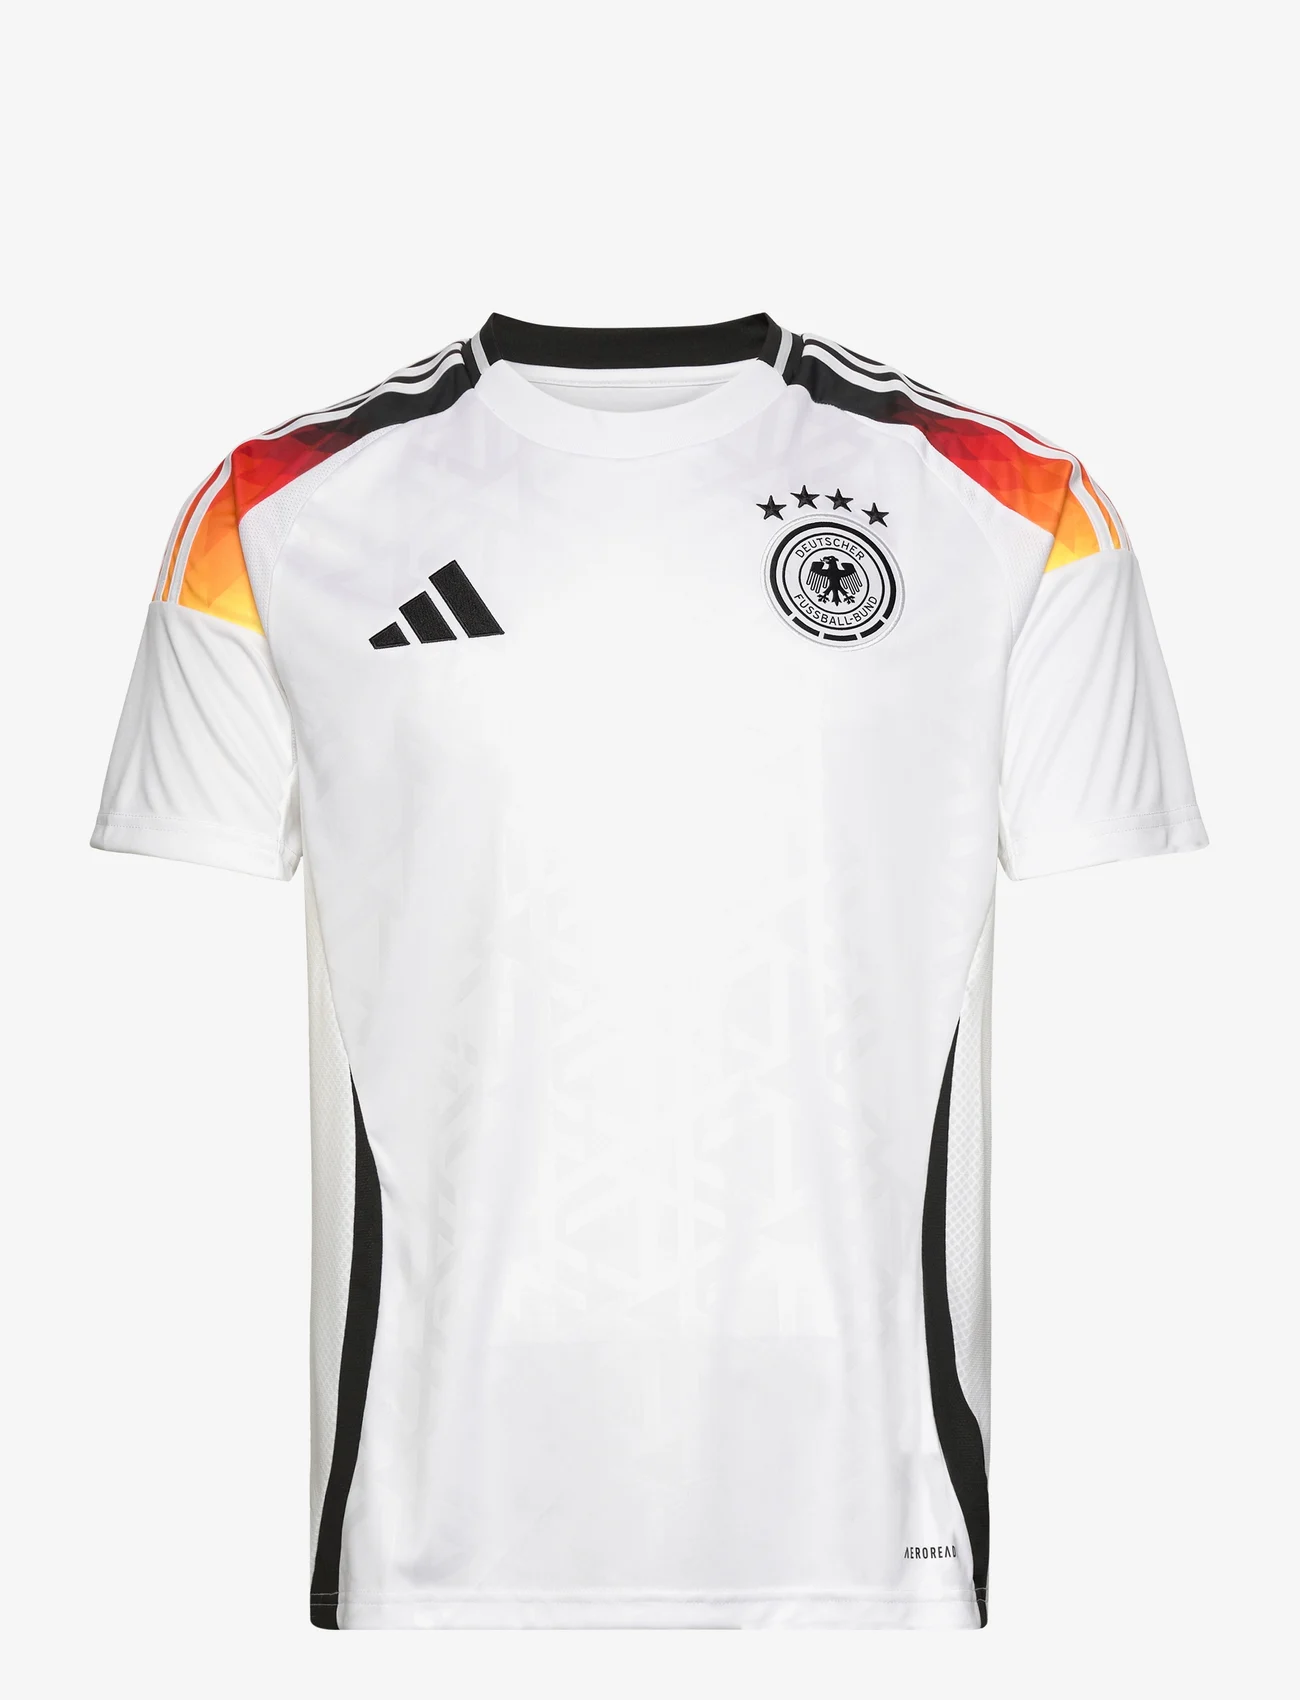 adidas Performance - DFB H JSY - koszulki piłkarskie - white - 0